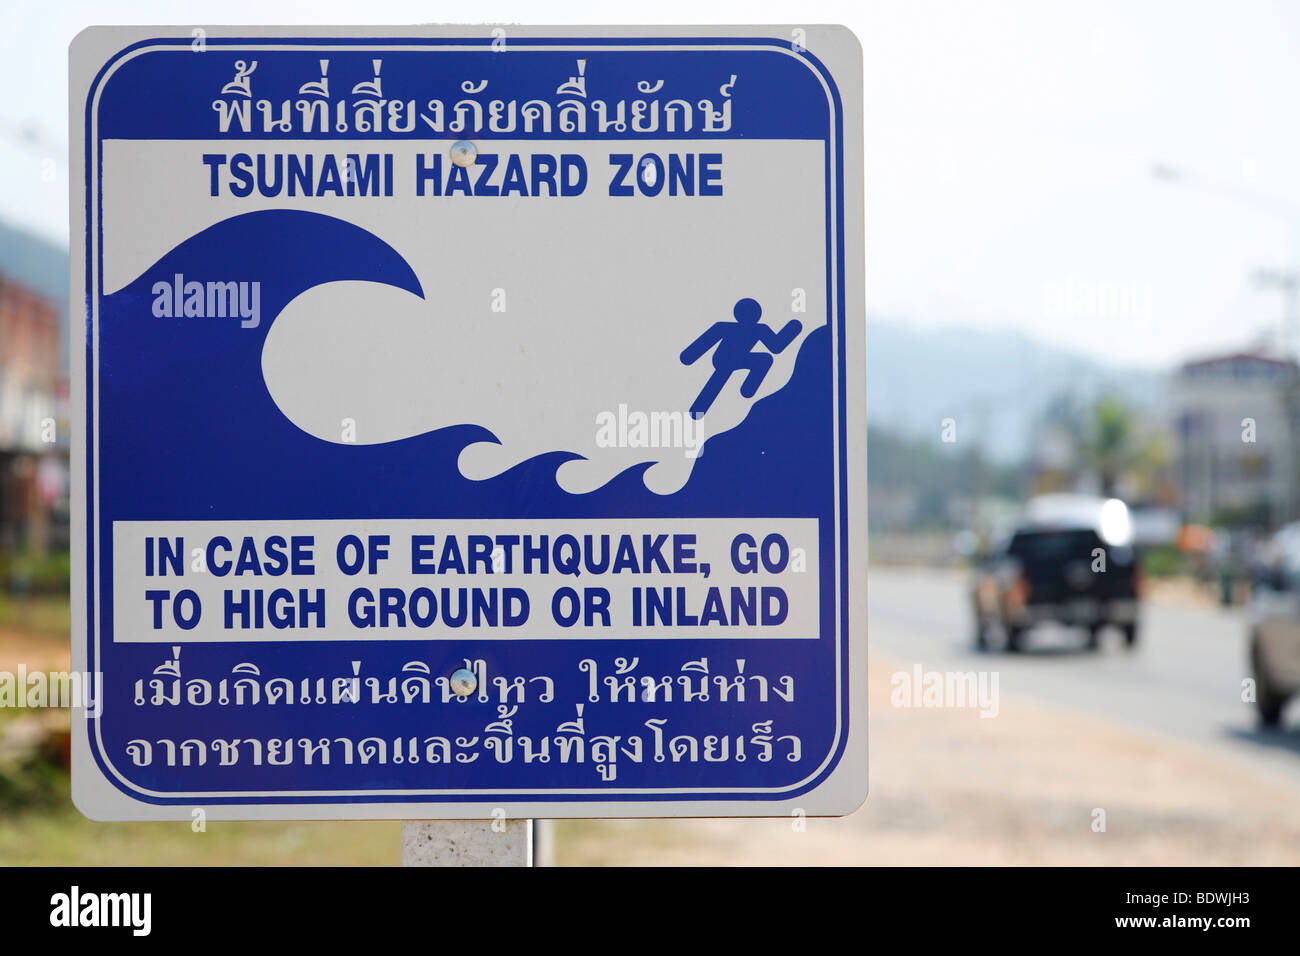 Tsunami warning sign on road showing escape routes, evacuation route, Khao Lak, Phuket, Thailand, Asia Stock Photo